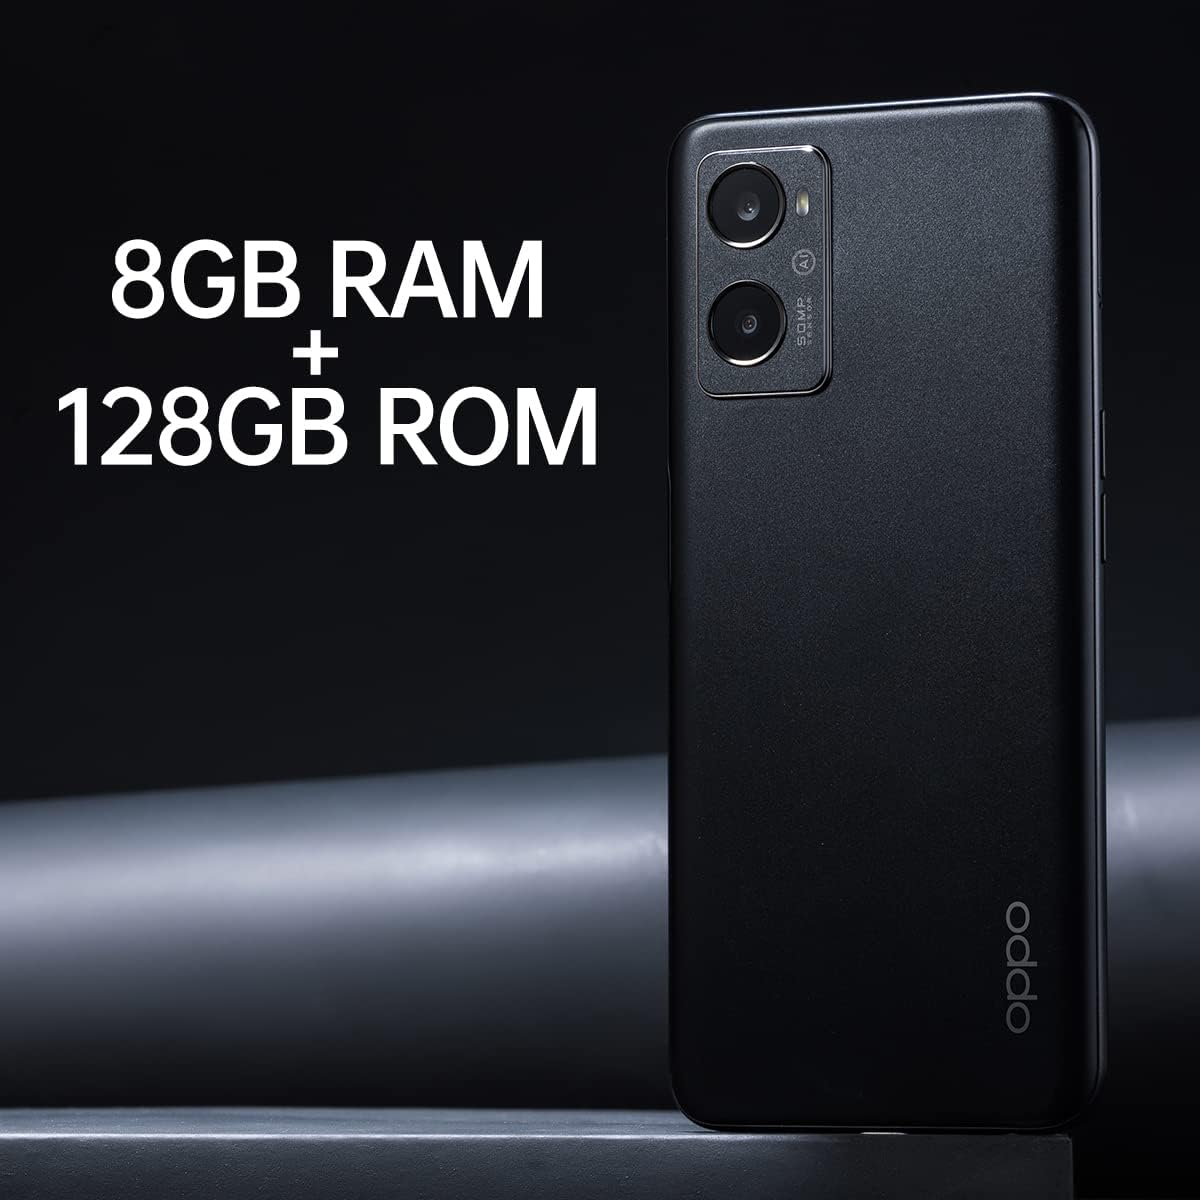 OPPO A76 Smartphone, Qualcomm Snapdragon 680, 90Hz screen, 13MP+2MP rear camera, 8MP front camera, RAM 4GB + ROM 128GB, 5000mAh 33W Supervooc, (UK Version), Black, 6.56“